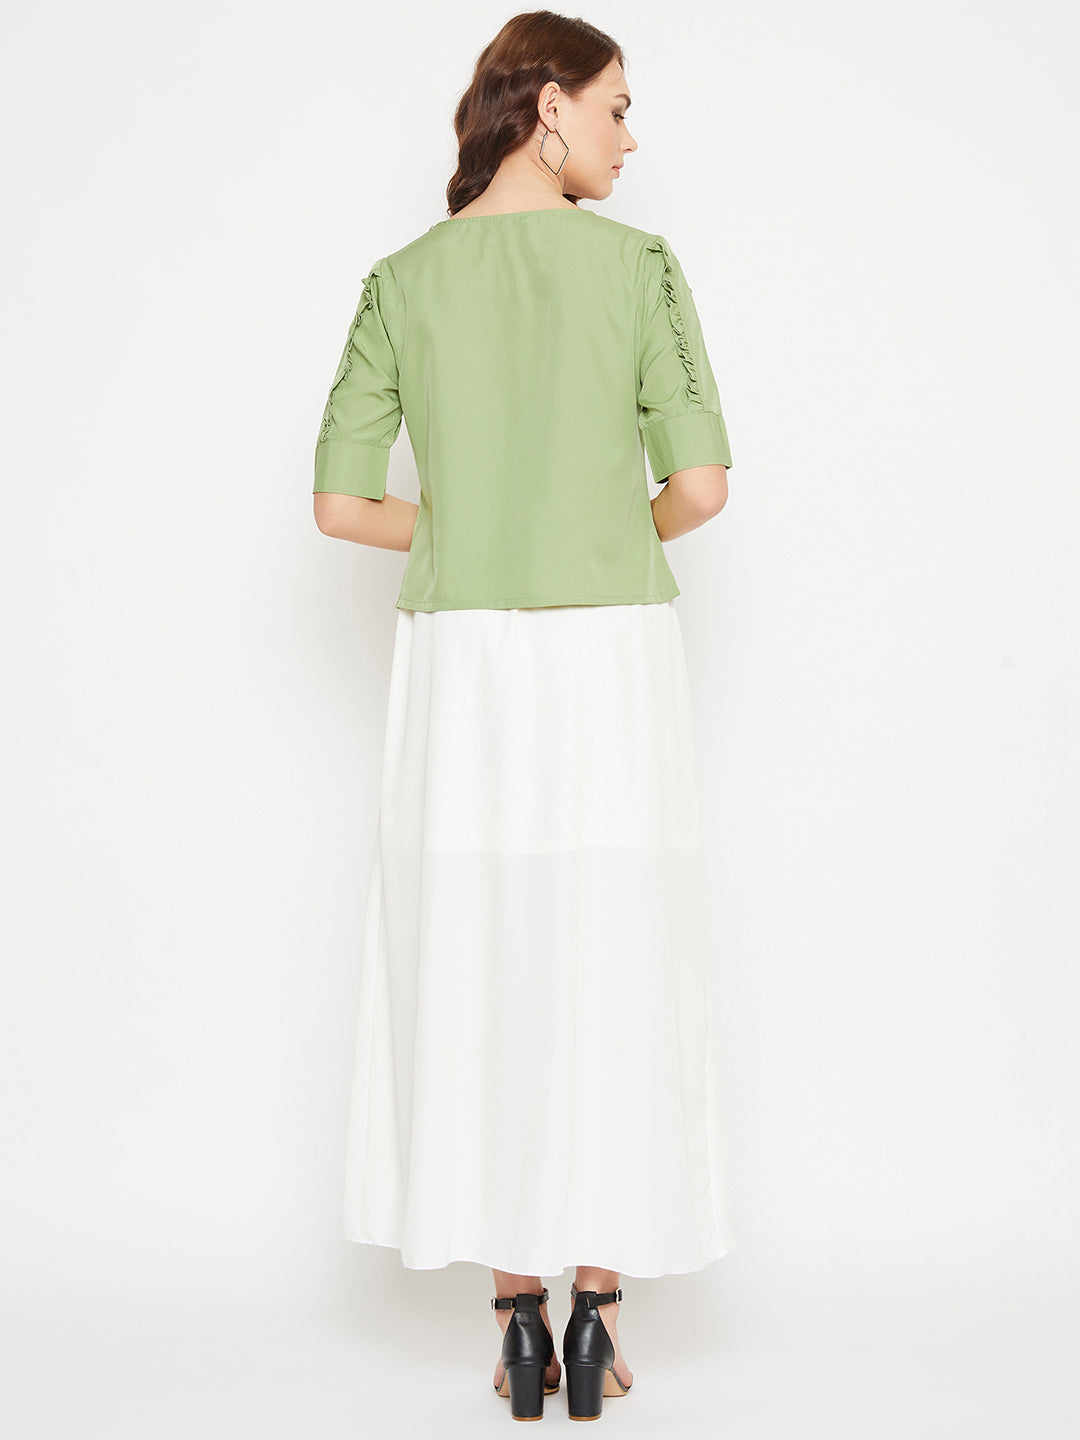 Frill Sleeve Top & Asymmetrical Skirt Set (Sku-BLMG20293).